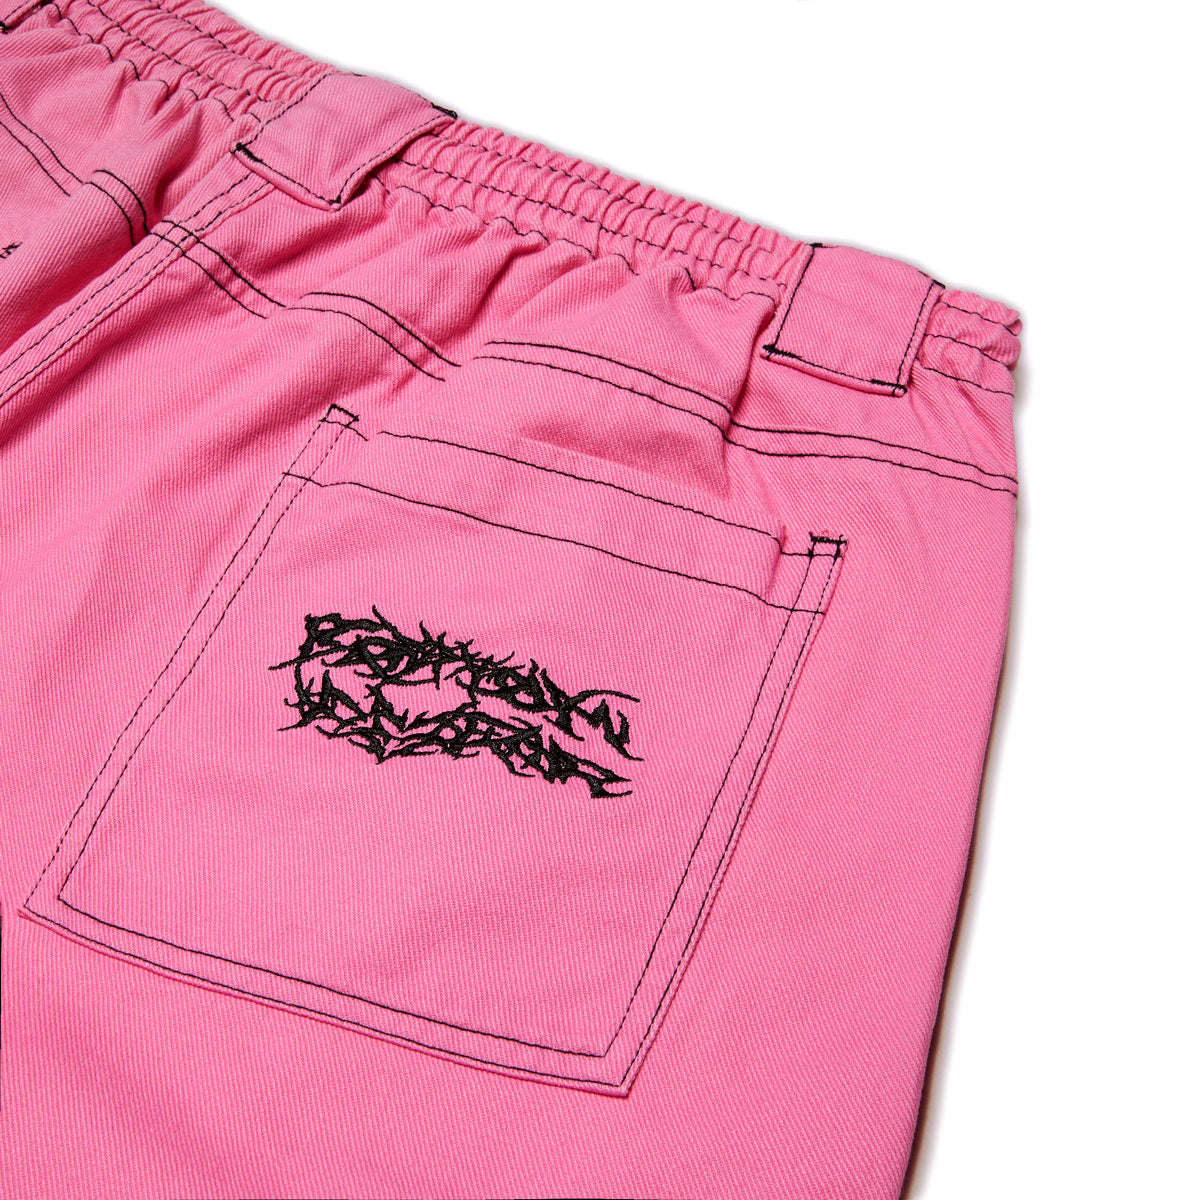 CCS Titus Twill Cargo Pants - Pink/Black image 6